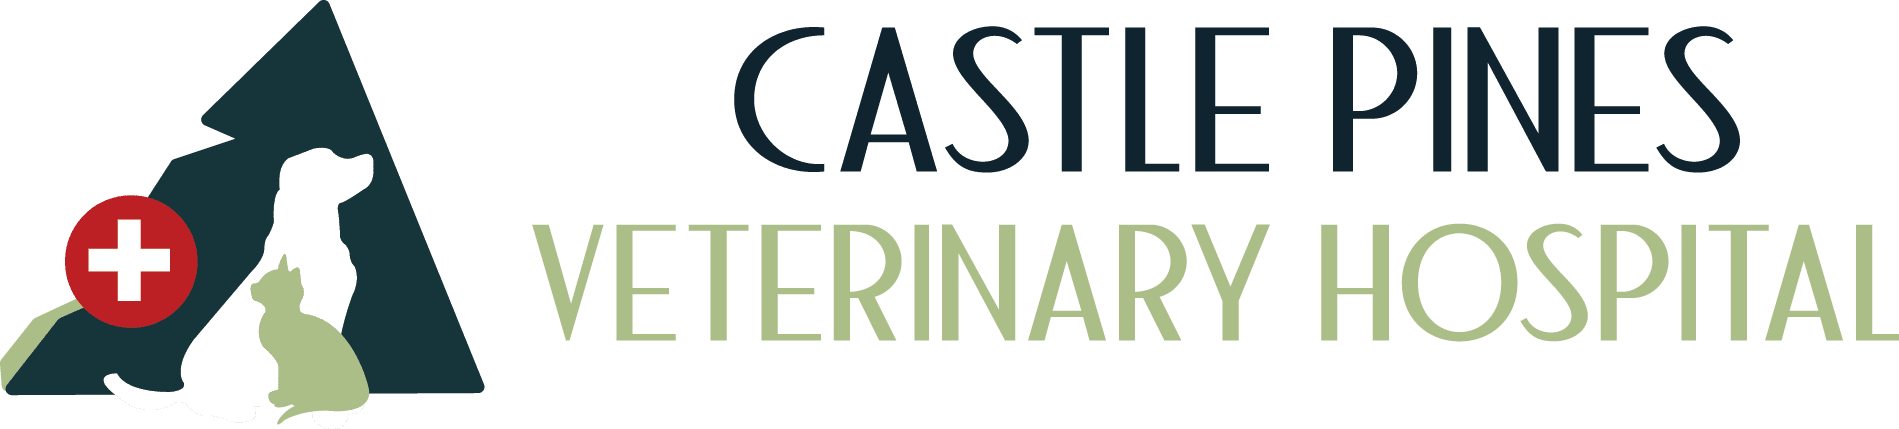 Castle Pines Veterinary Hospital